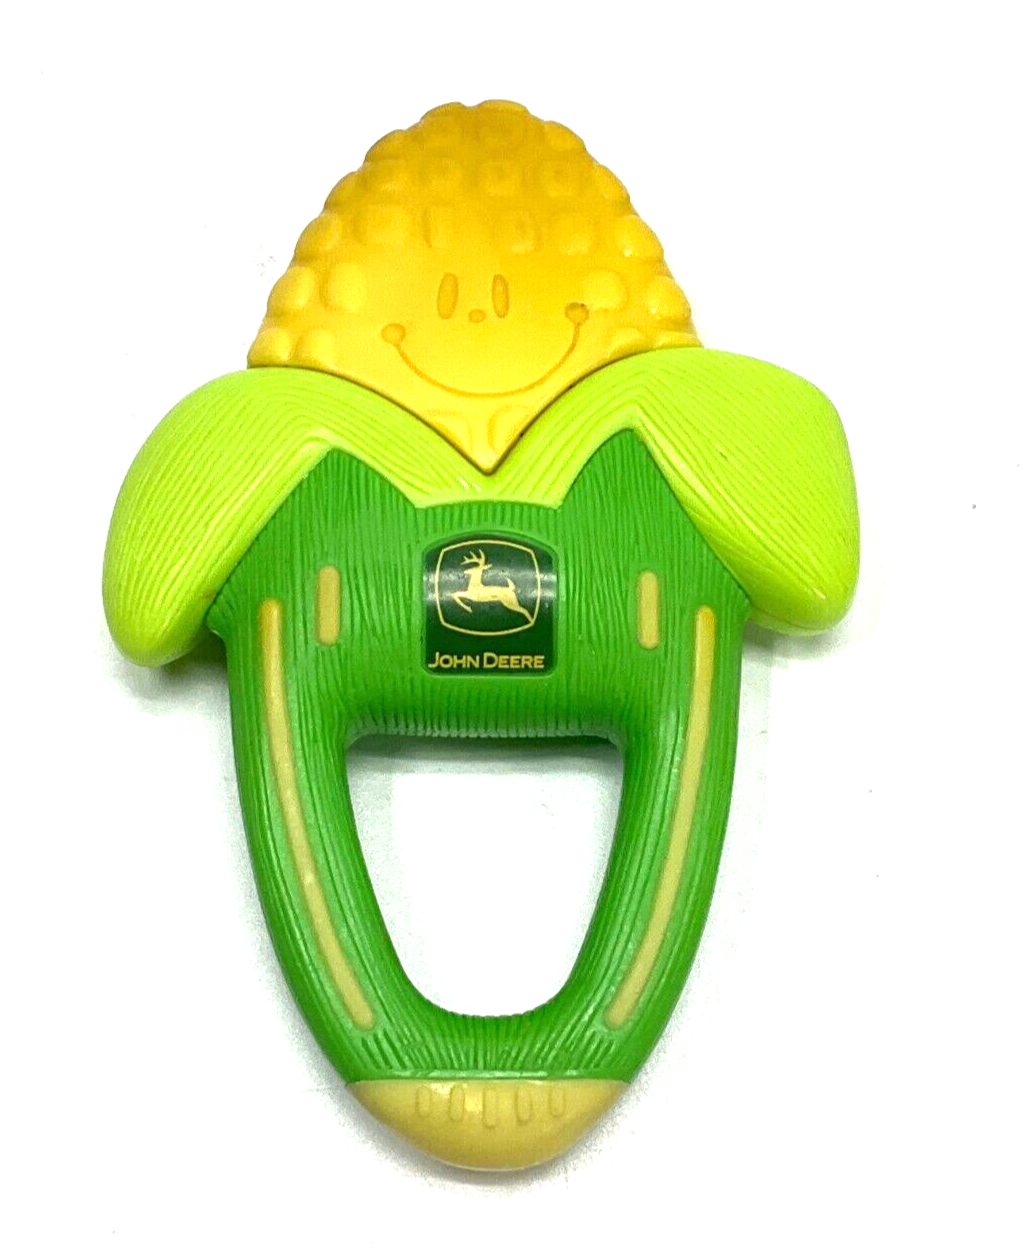 John Deere Corn Cob Massaging Baby Teether Toy 2005 Learning Curve